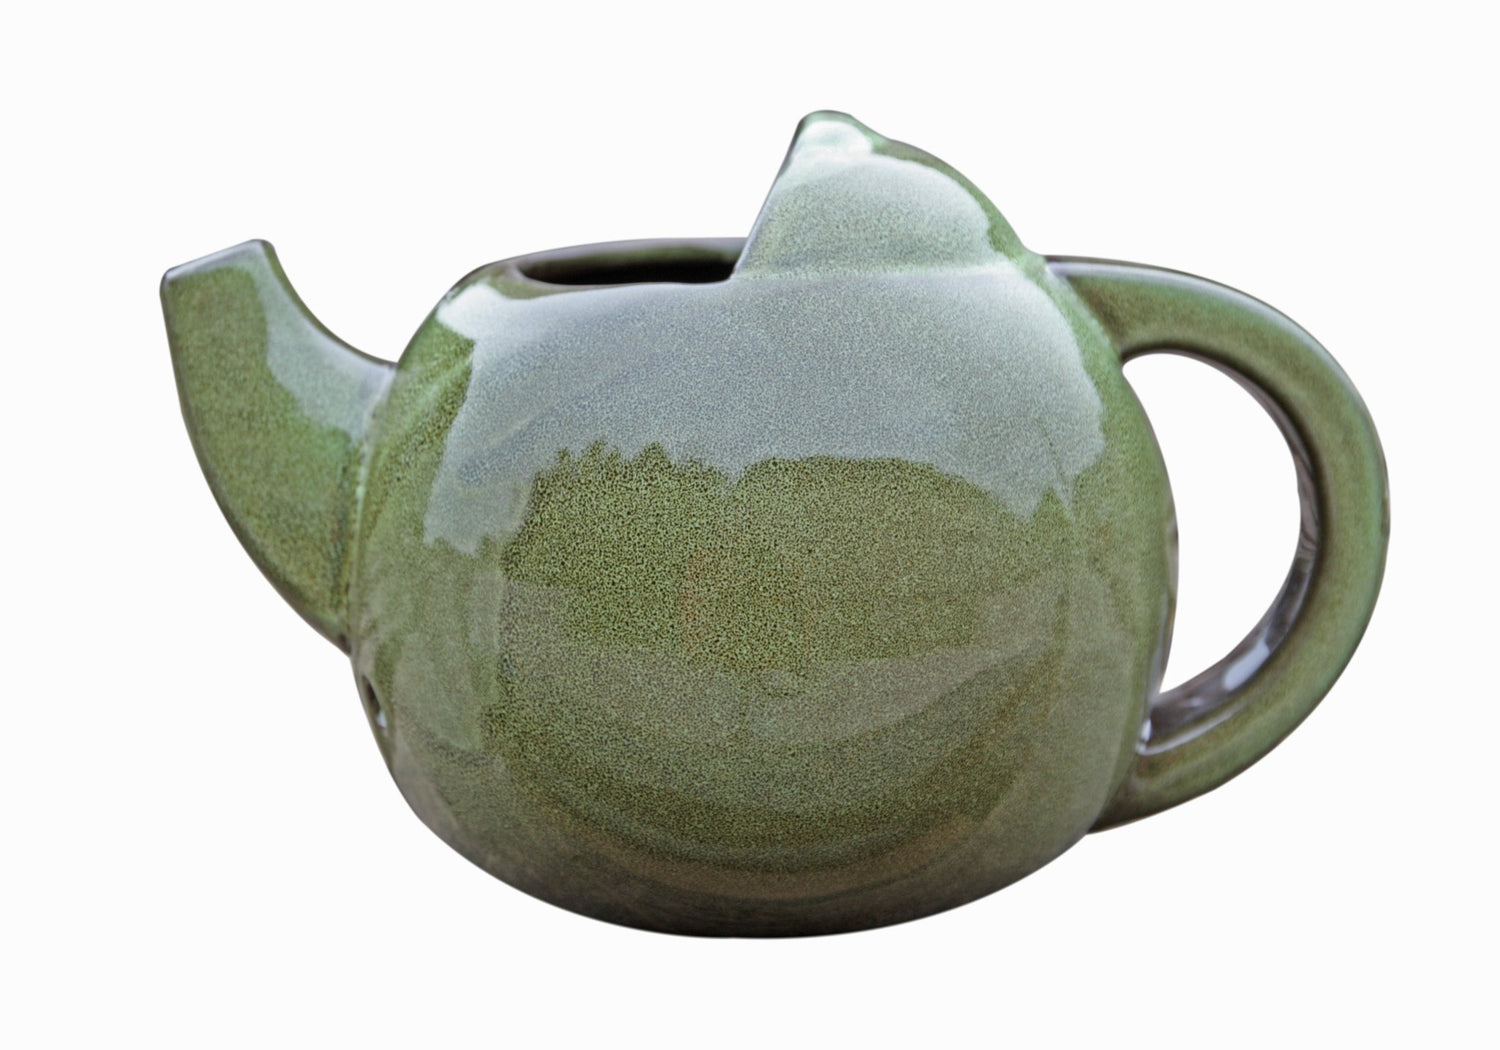 Robin Teapot Nester - The Irish Gardener Store